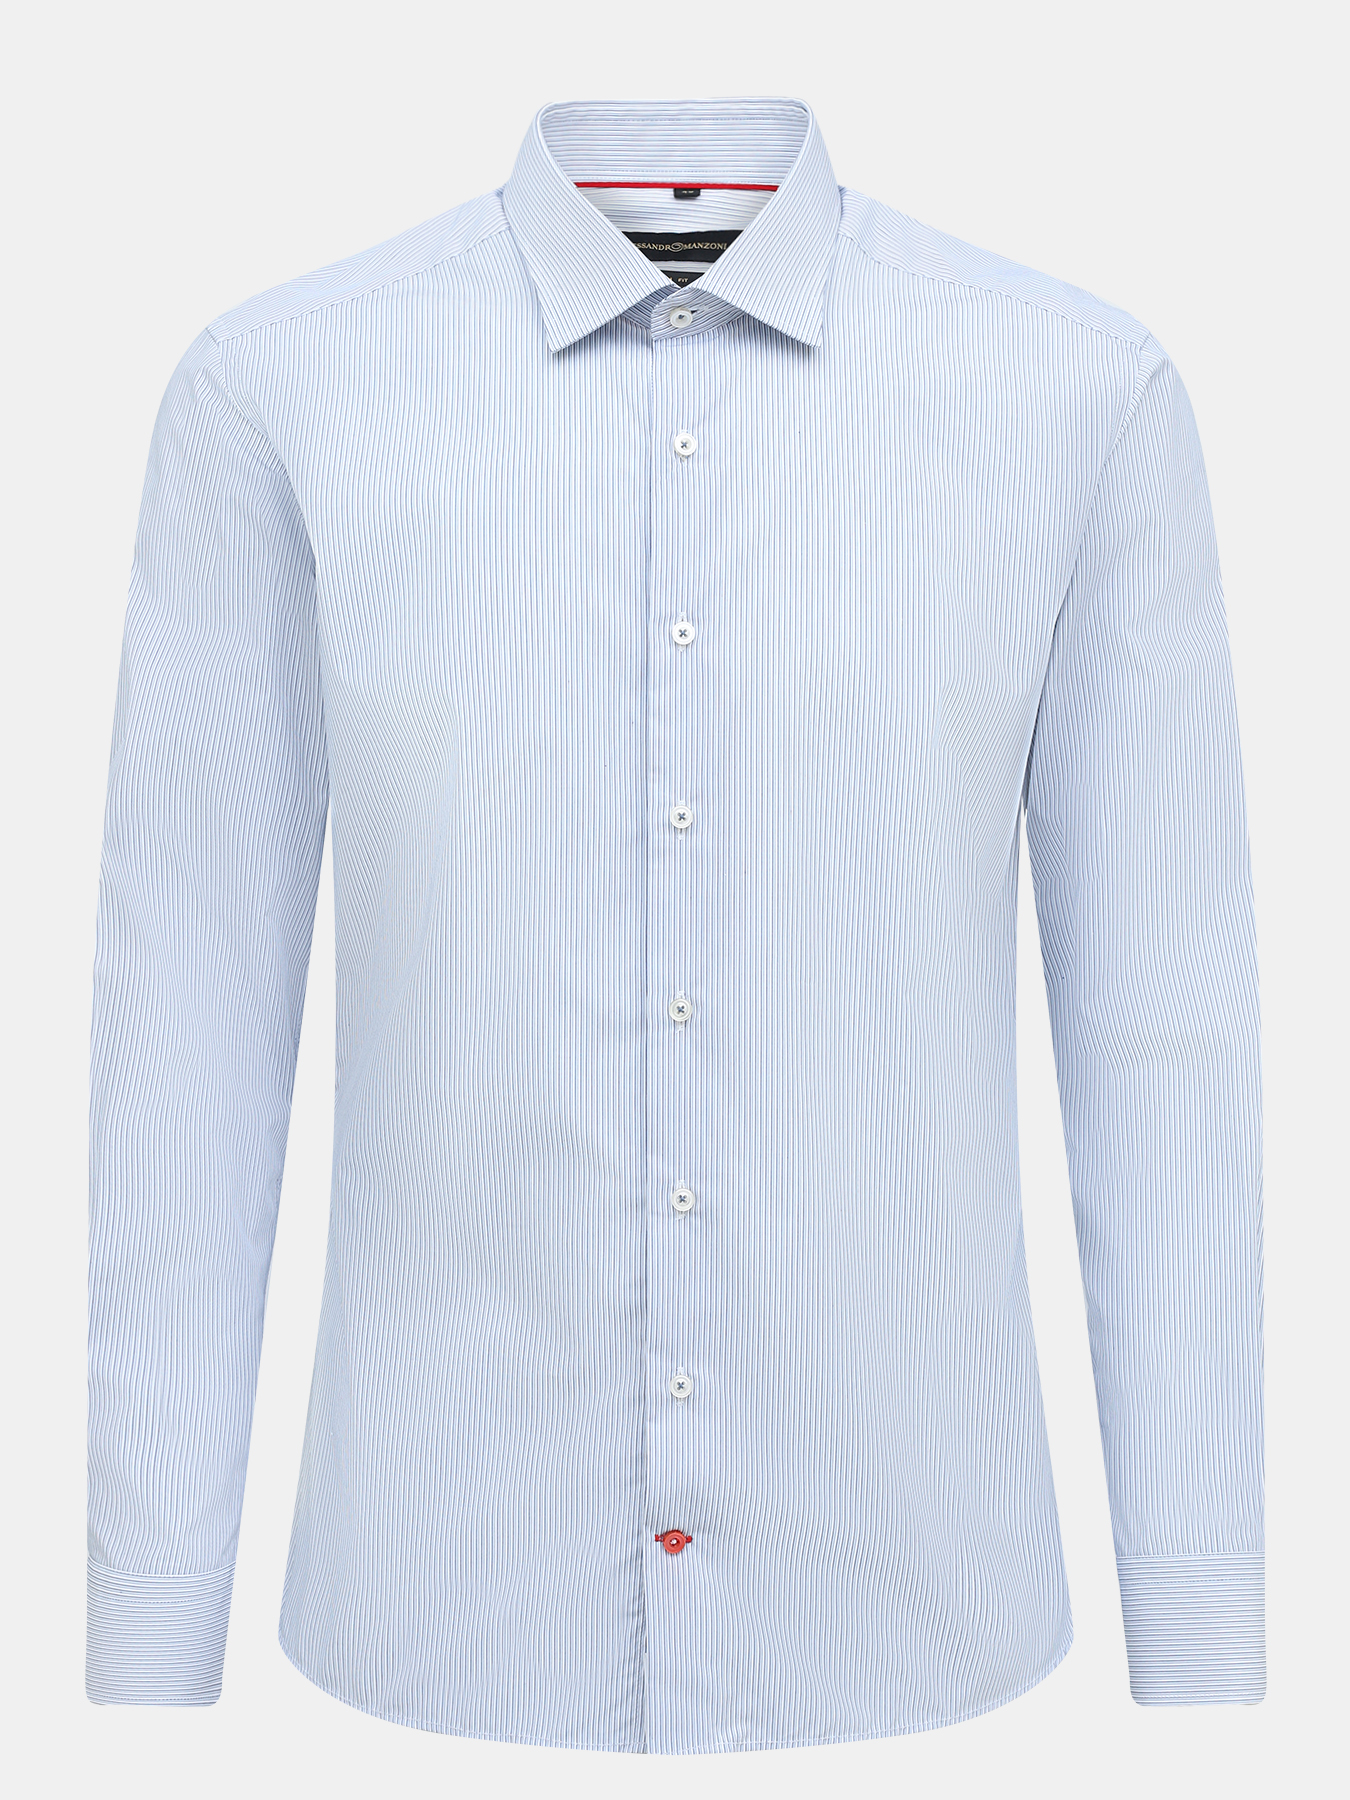 Рубашка Alessandro Manzoni 366026-049, цвет мультиколор, размер 48 - фото 1